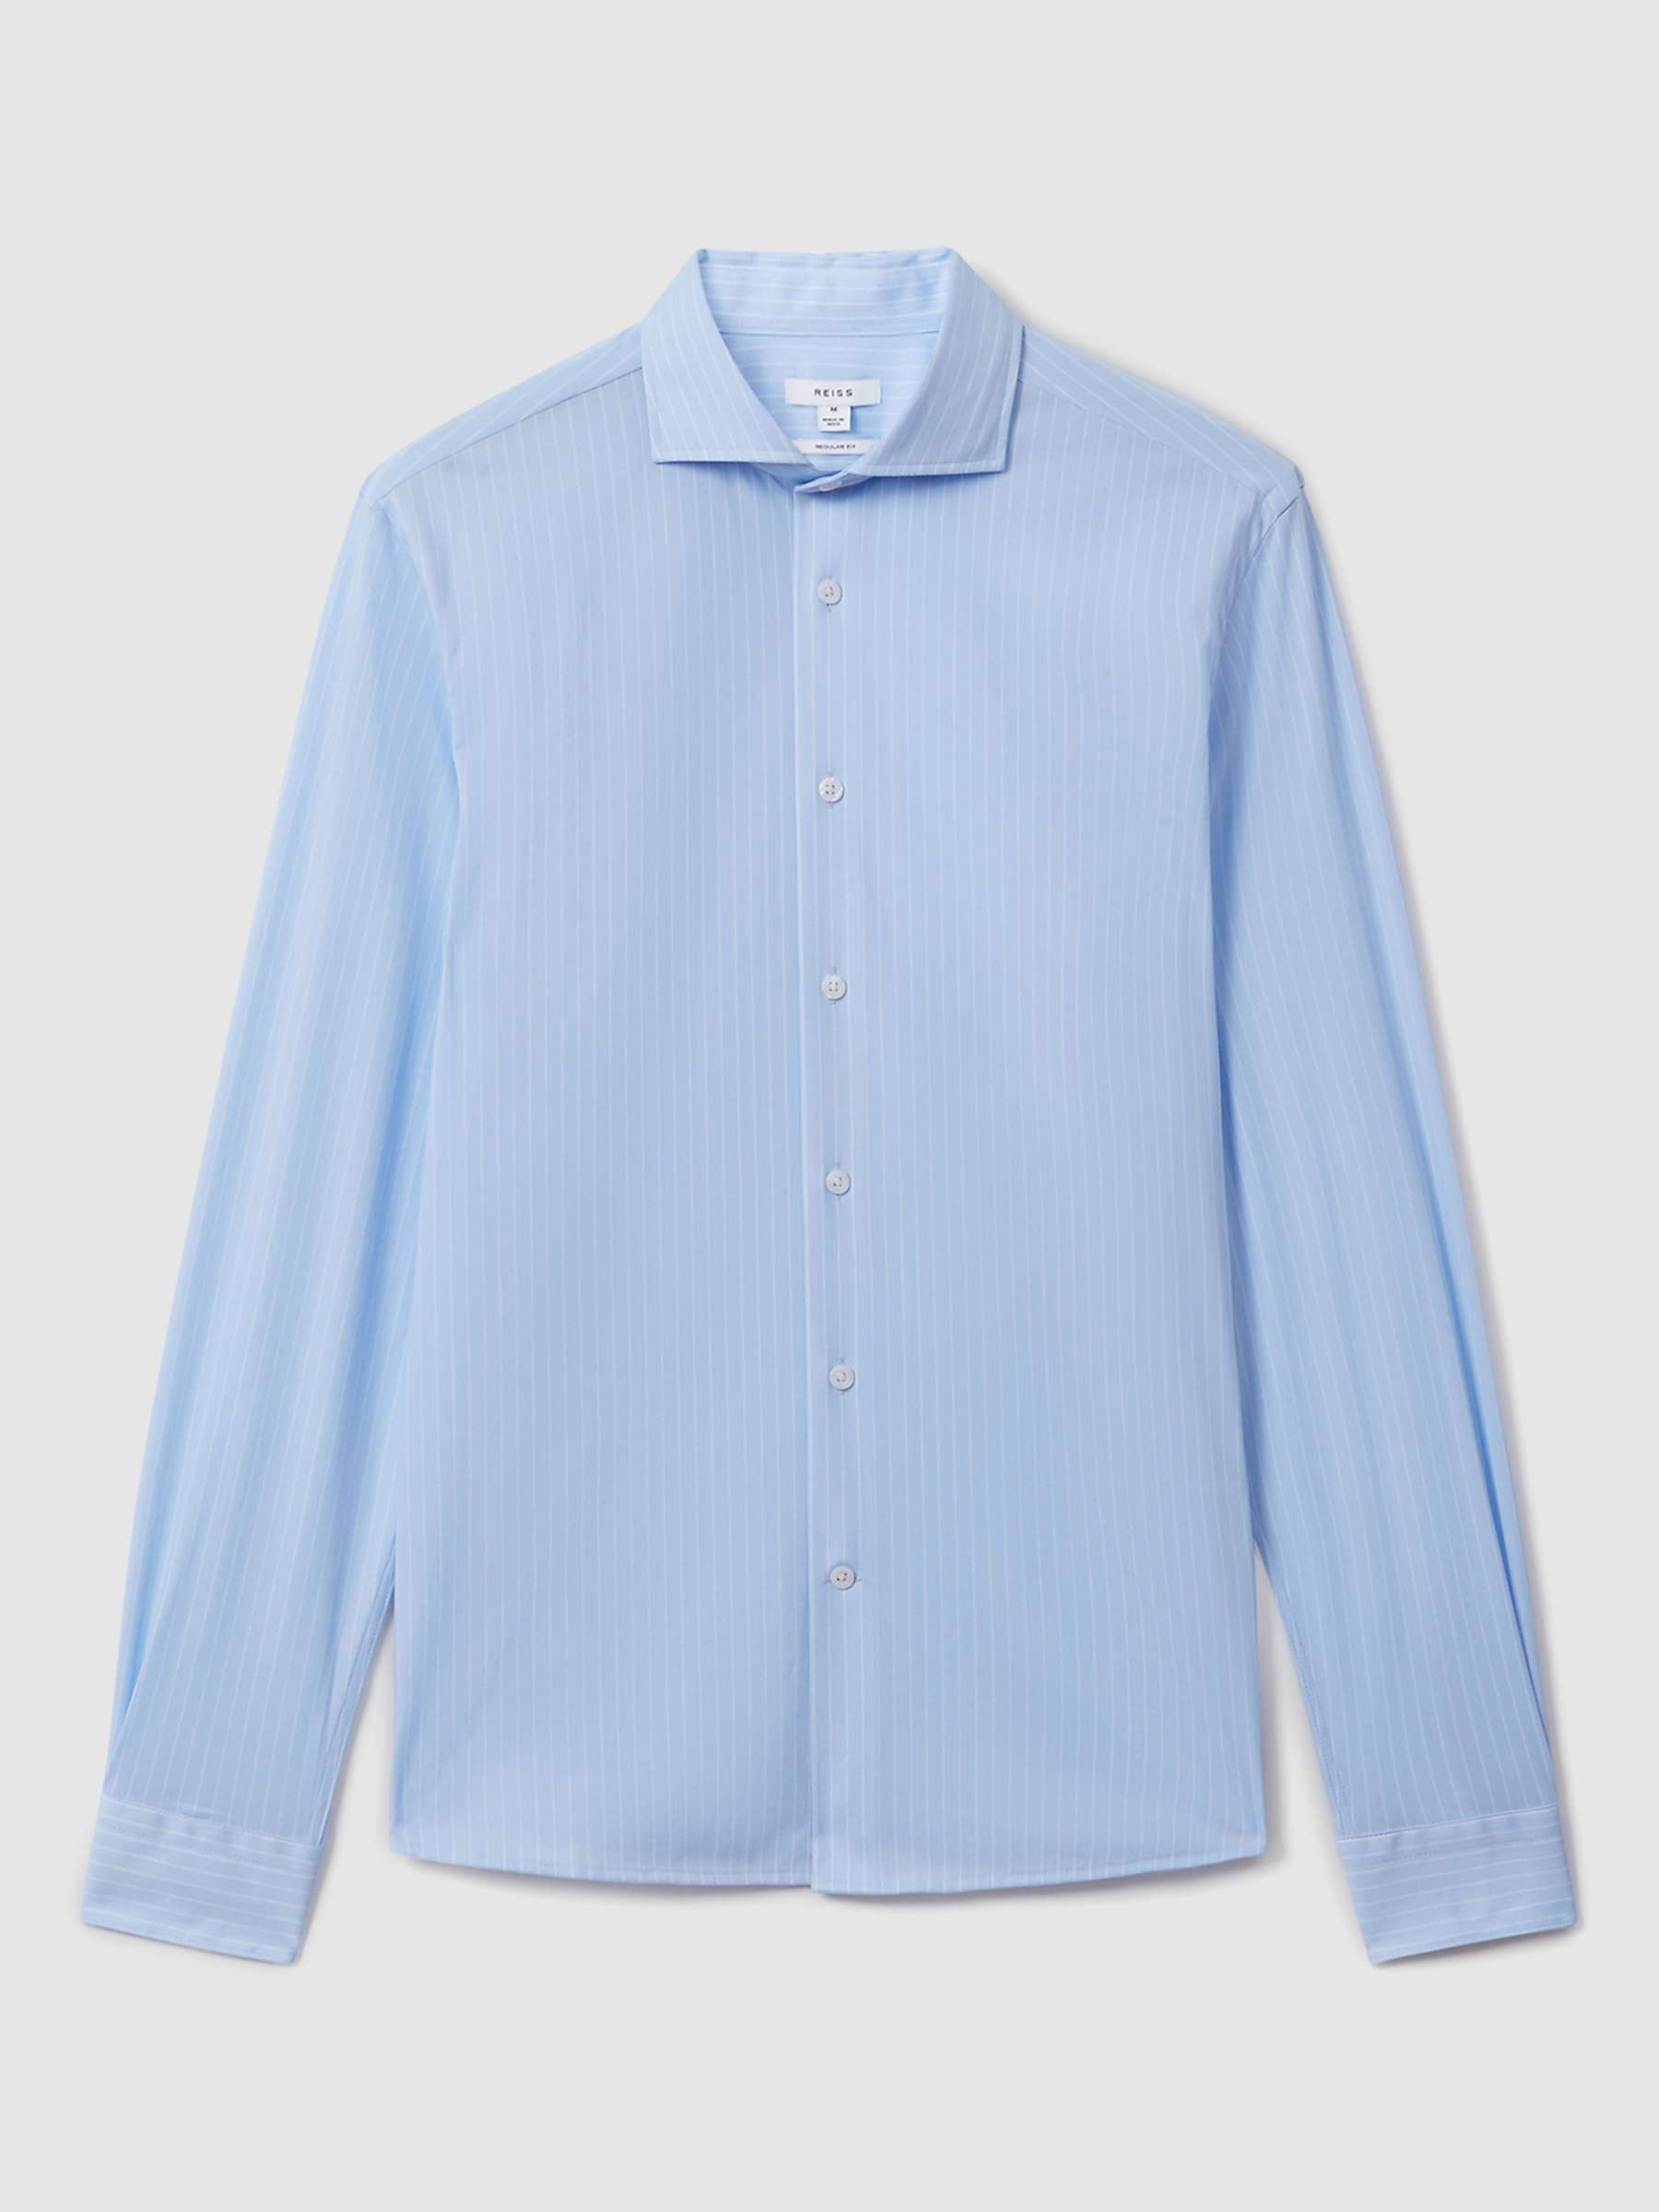 Buy Reiss Fletcher Long Sleeve Shirt, Blue/White Online at johnlewis.com